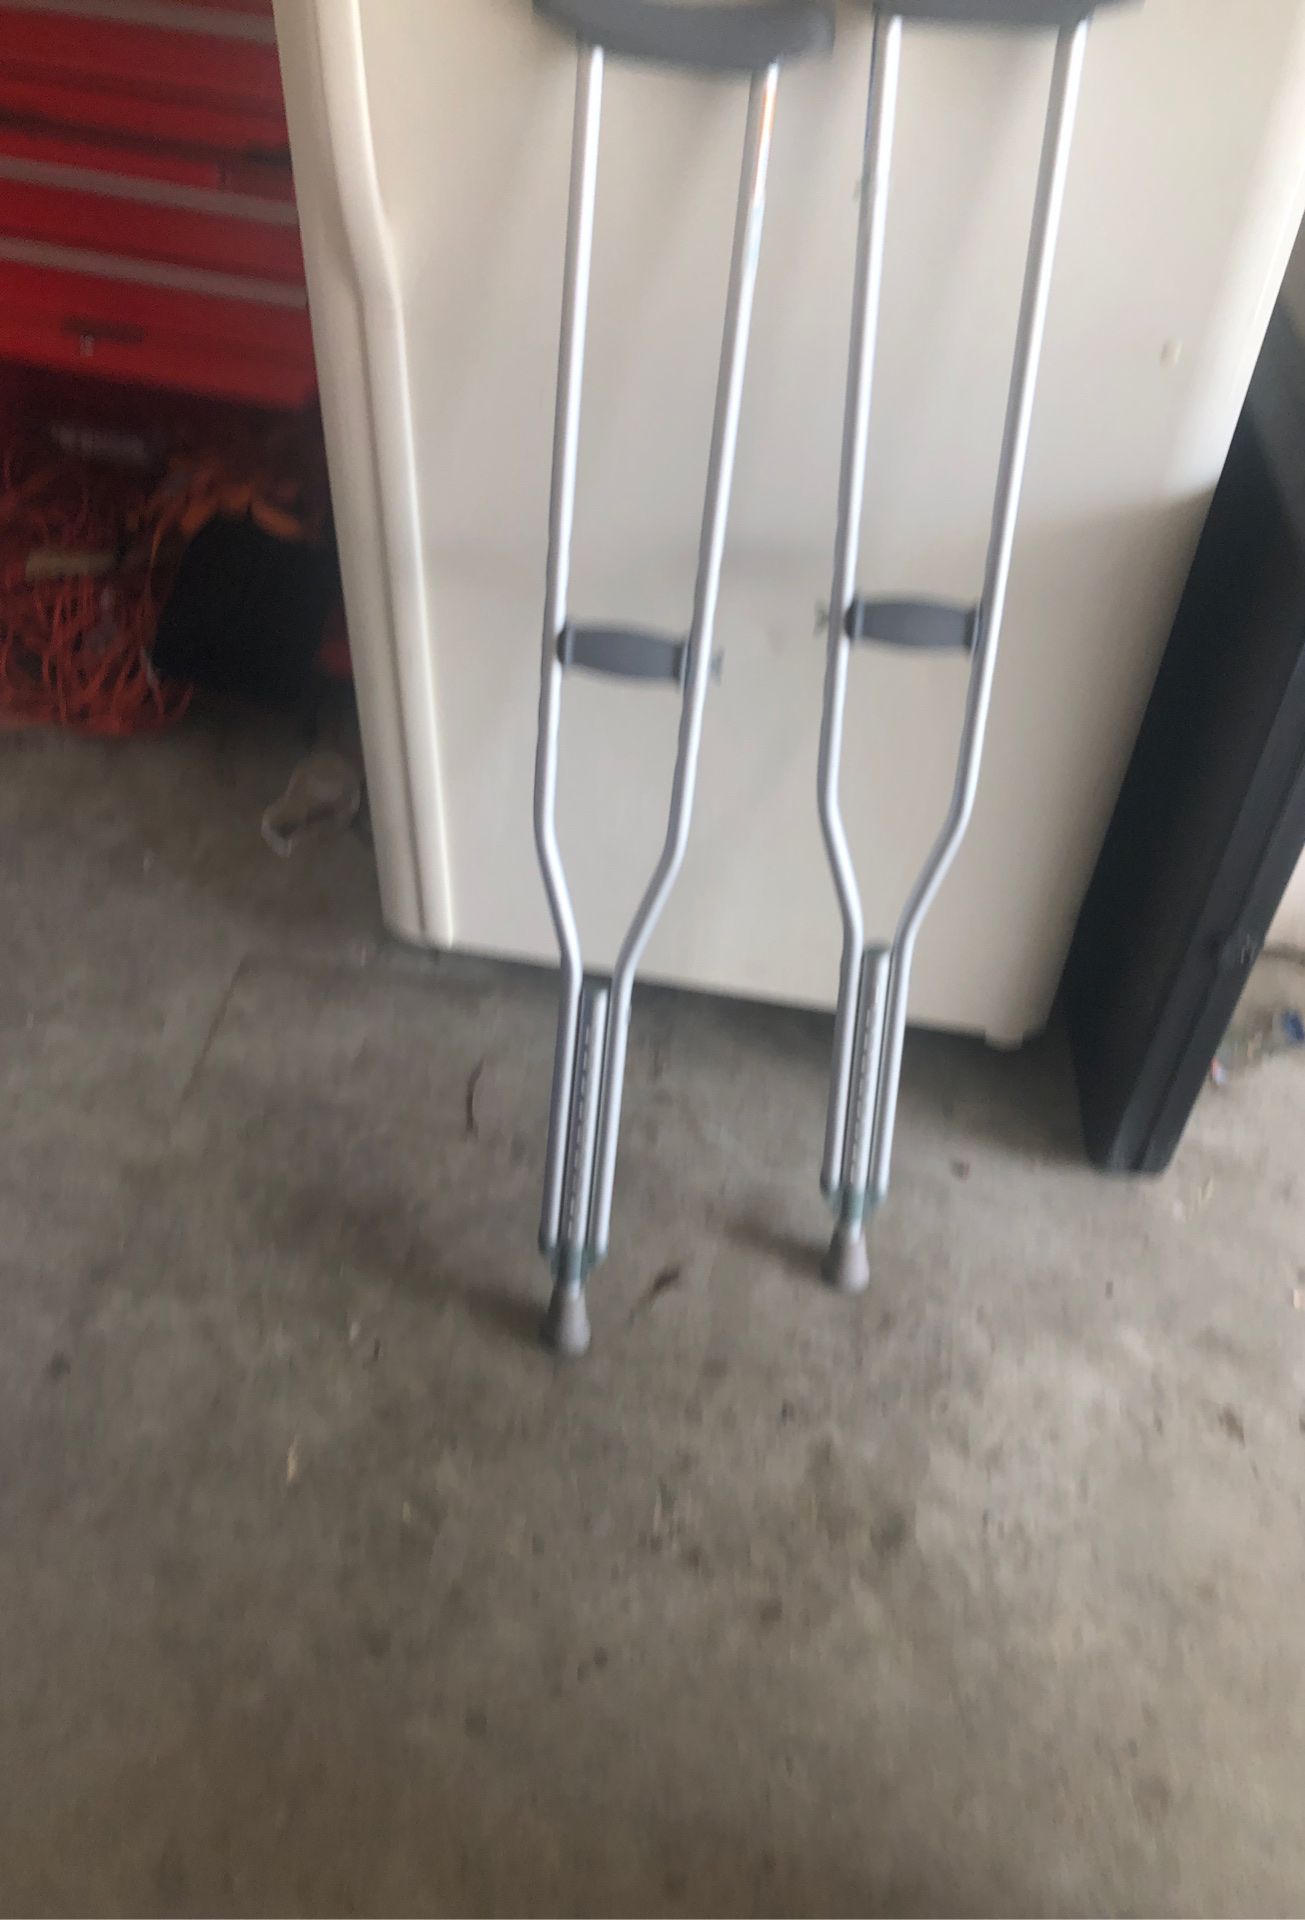 FREE crutches